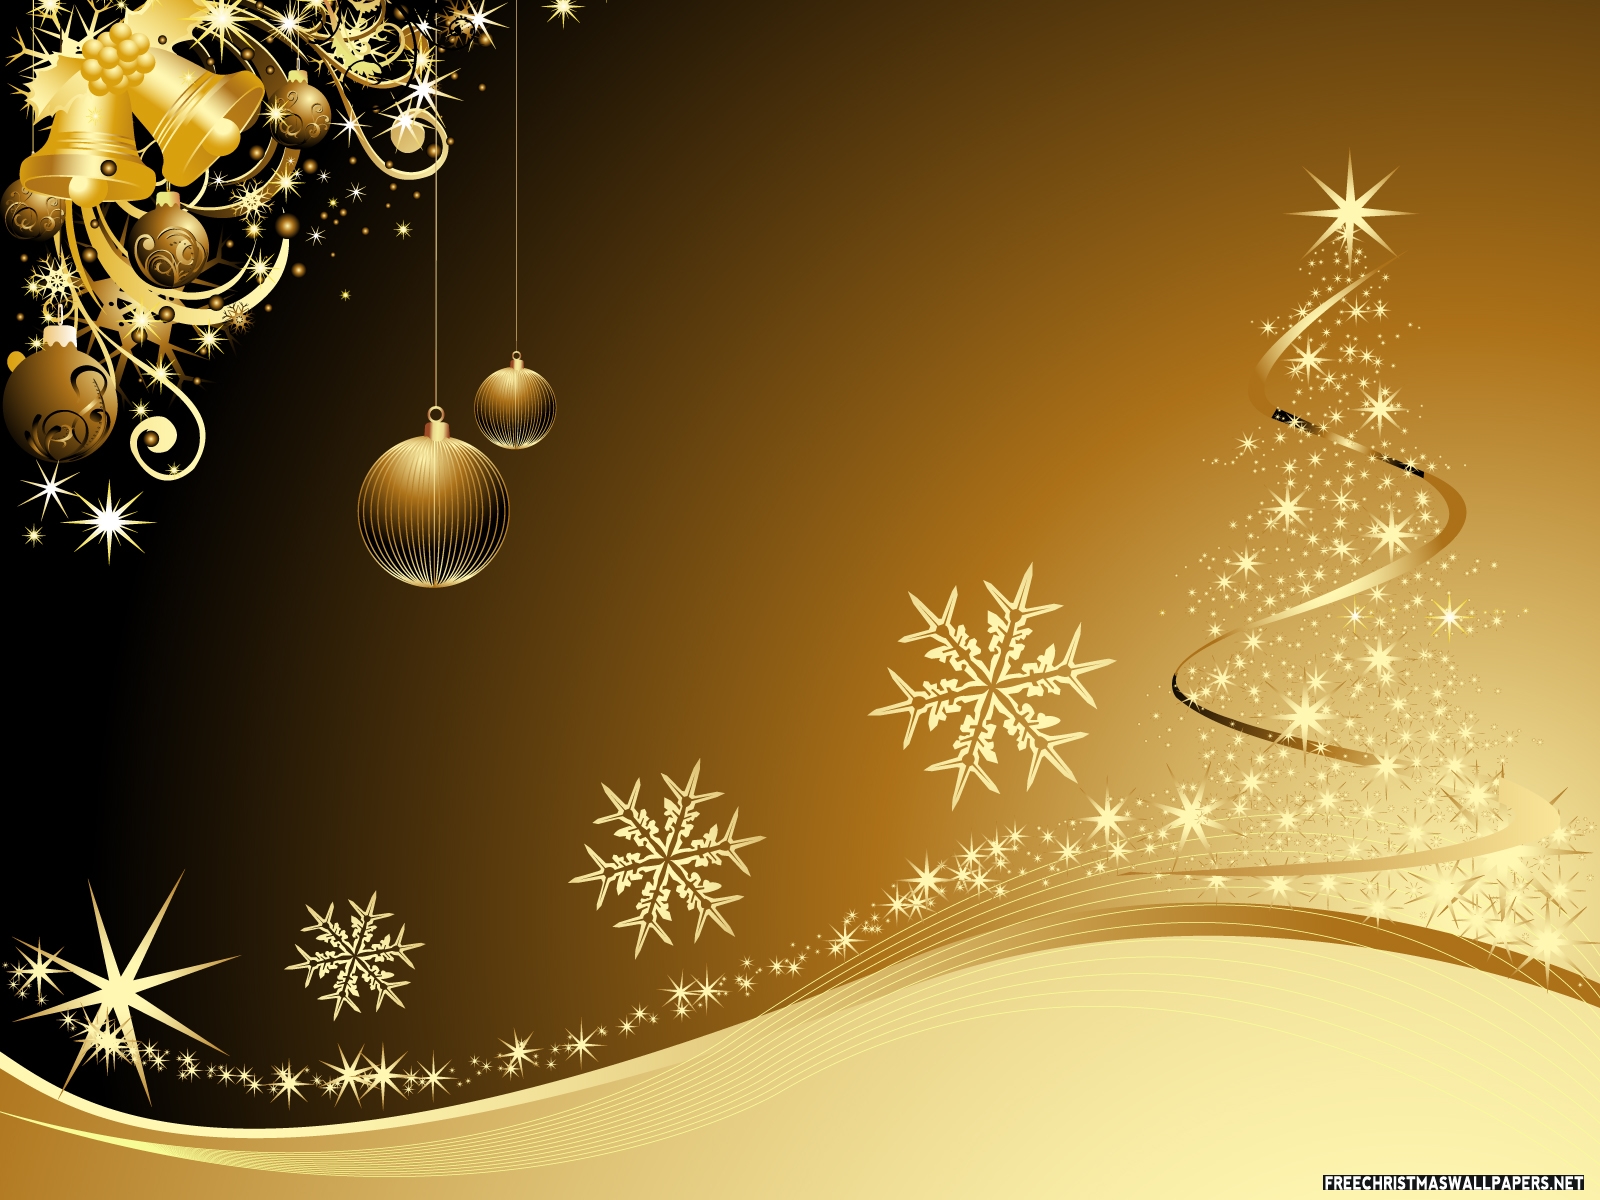 https://blogger.googleusercontent.com/img/b/R29vZ2xl/AVvXsEhUzVvsdjt9YgFQYwp9-lJSBDAk6N3H841WP4PNtB2cByn3FDogz2Hu2QZaAbGp1jNs3OBoViZStGqfxSVFiSVT5uHiotrRfuA2ttUpyvWeLSlM2BghEHPU4NCQxJRUq5oyVA4otHG5NvE/s1600/Golden-Christmas.jpeg